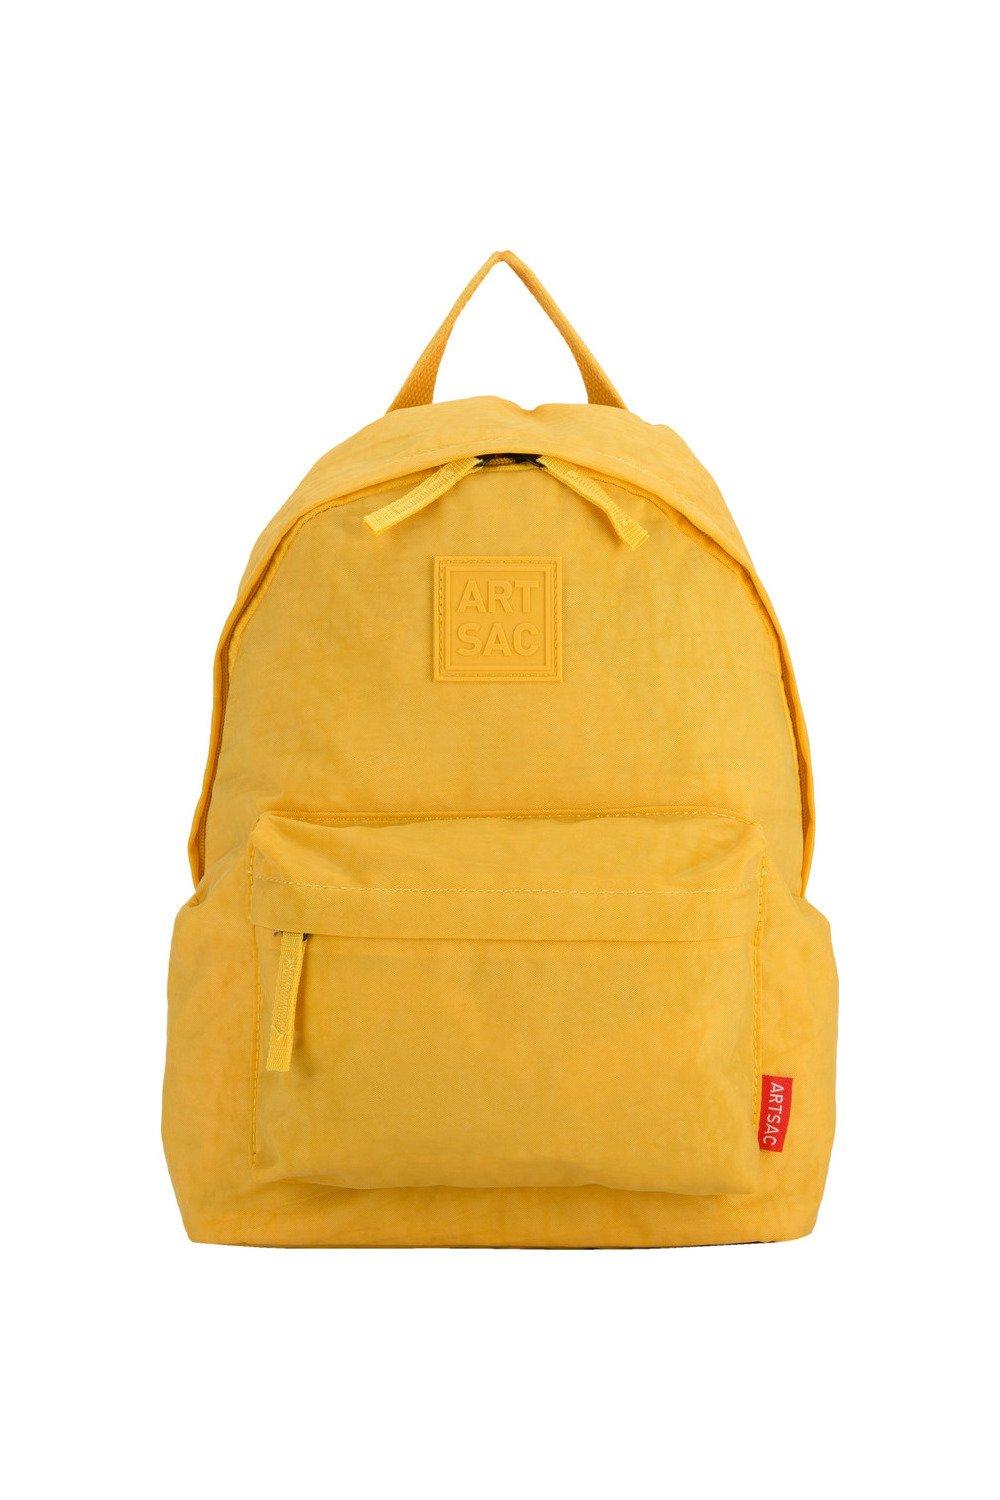 Рюкзак Syers с передним карманом Artsac, желтый